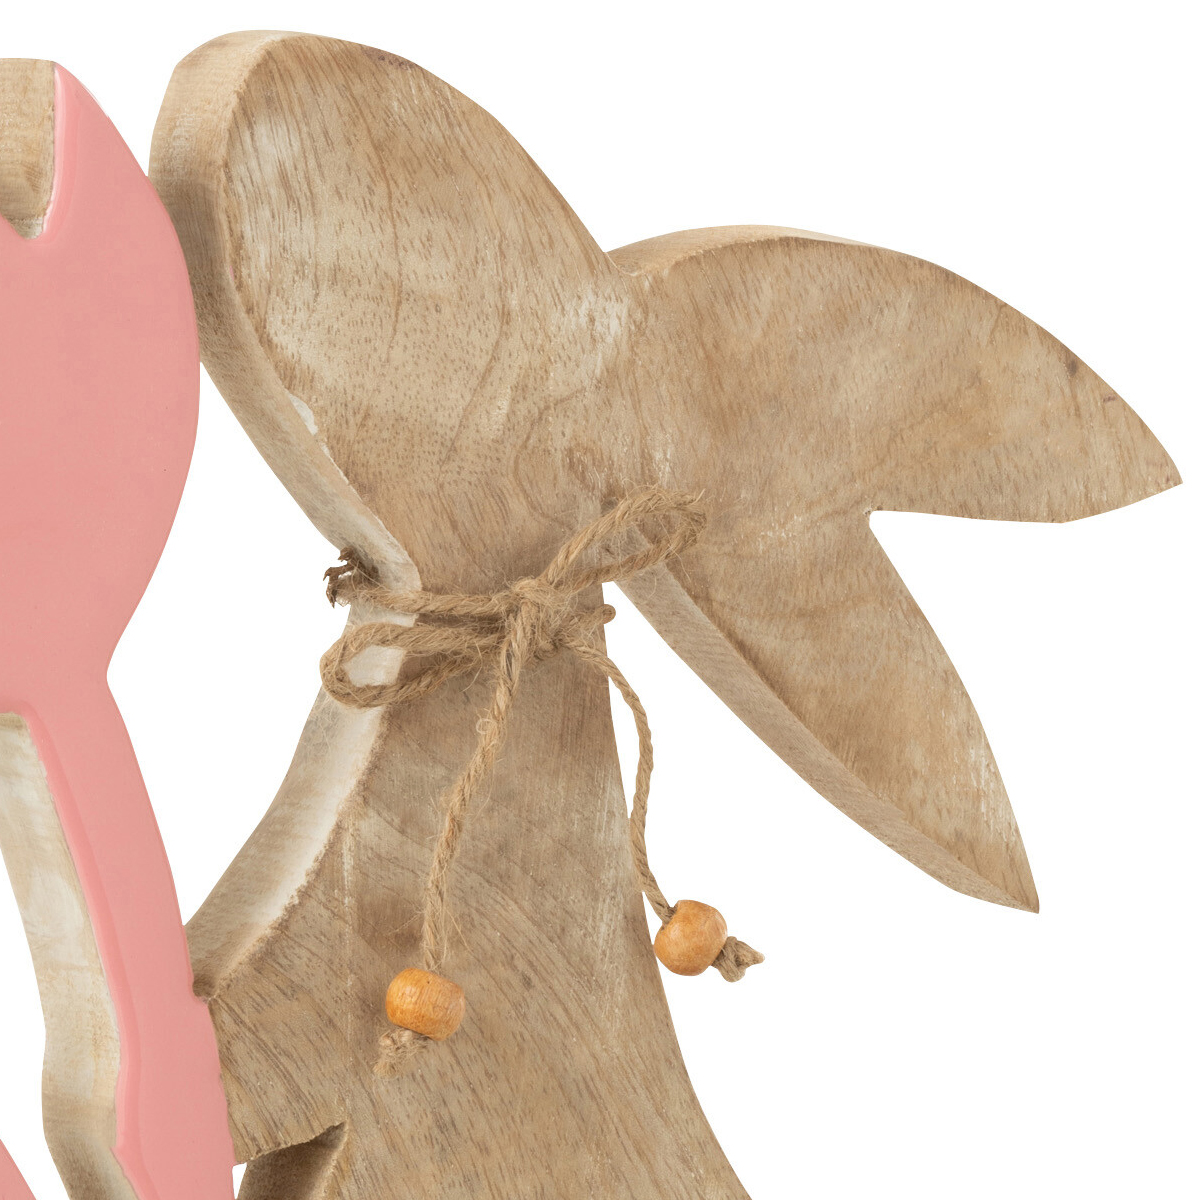 Rabbit and tulip figurine in rosewood